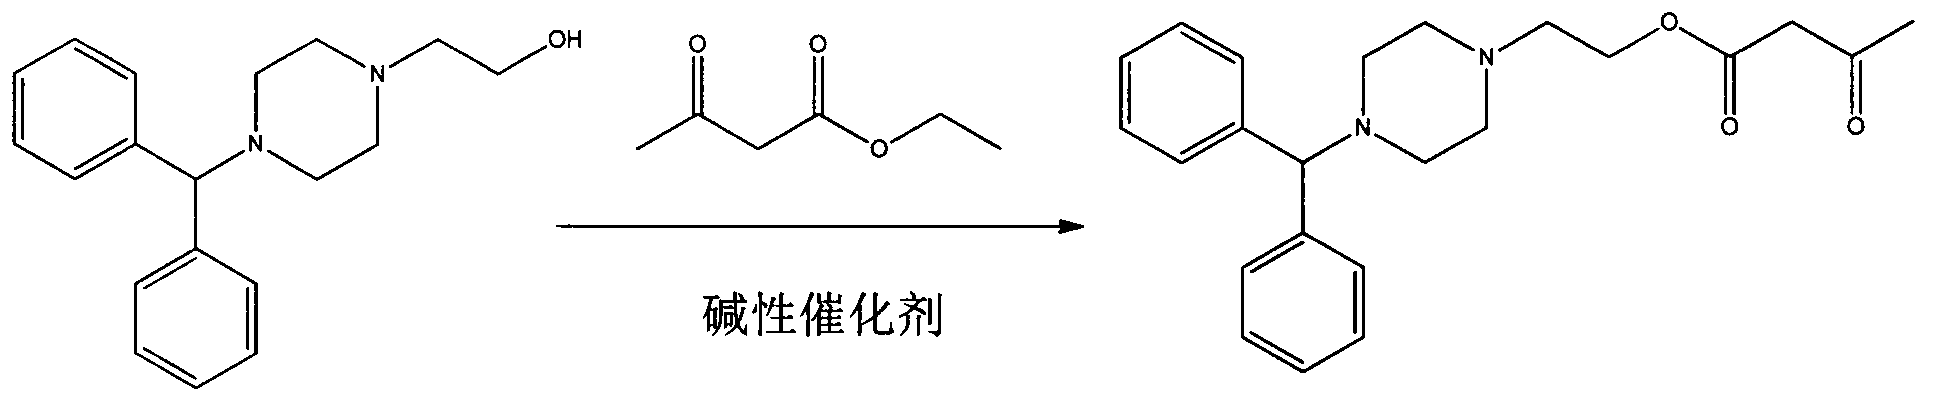 Preparation method of manidipine intermediate 2-(4-diphenylmethyl piperazinyl)ethyl acetoacetate